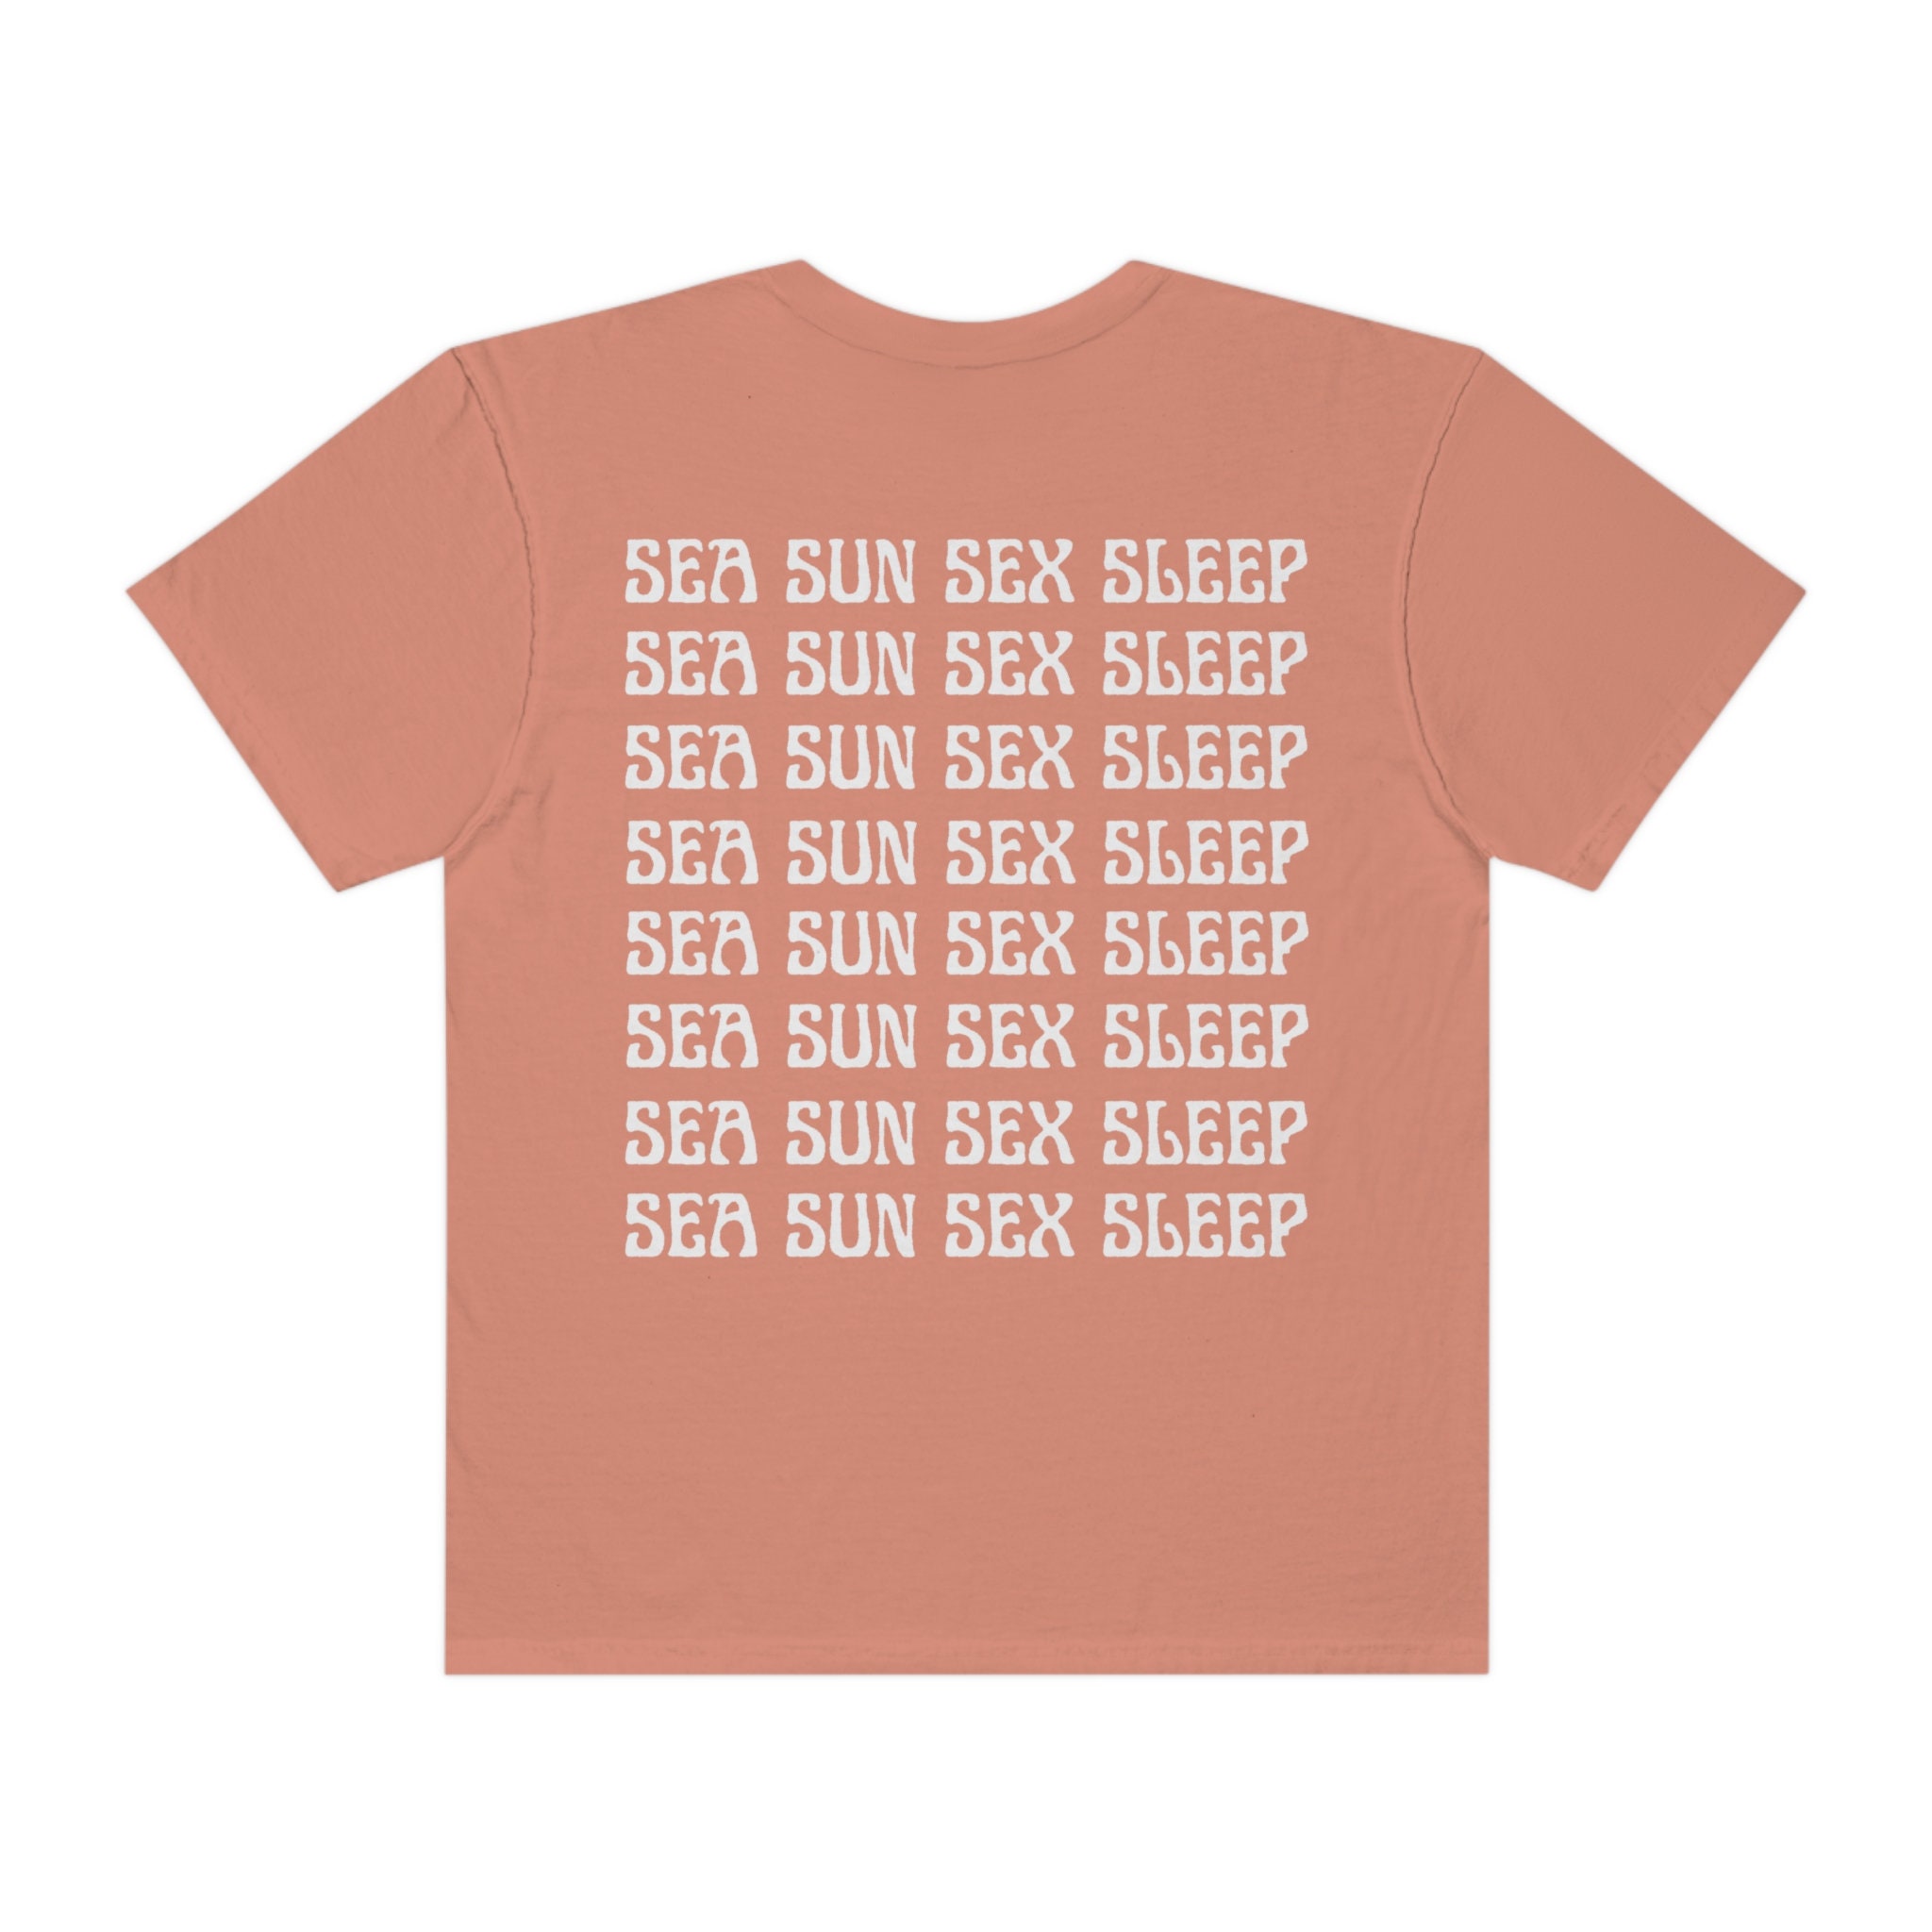 Sex Hd Slepen - Teen sex shirt - Etsy Nederland